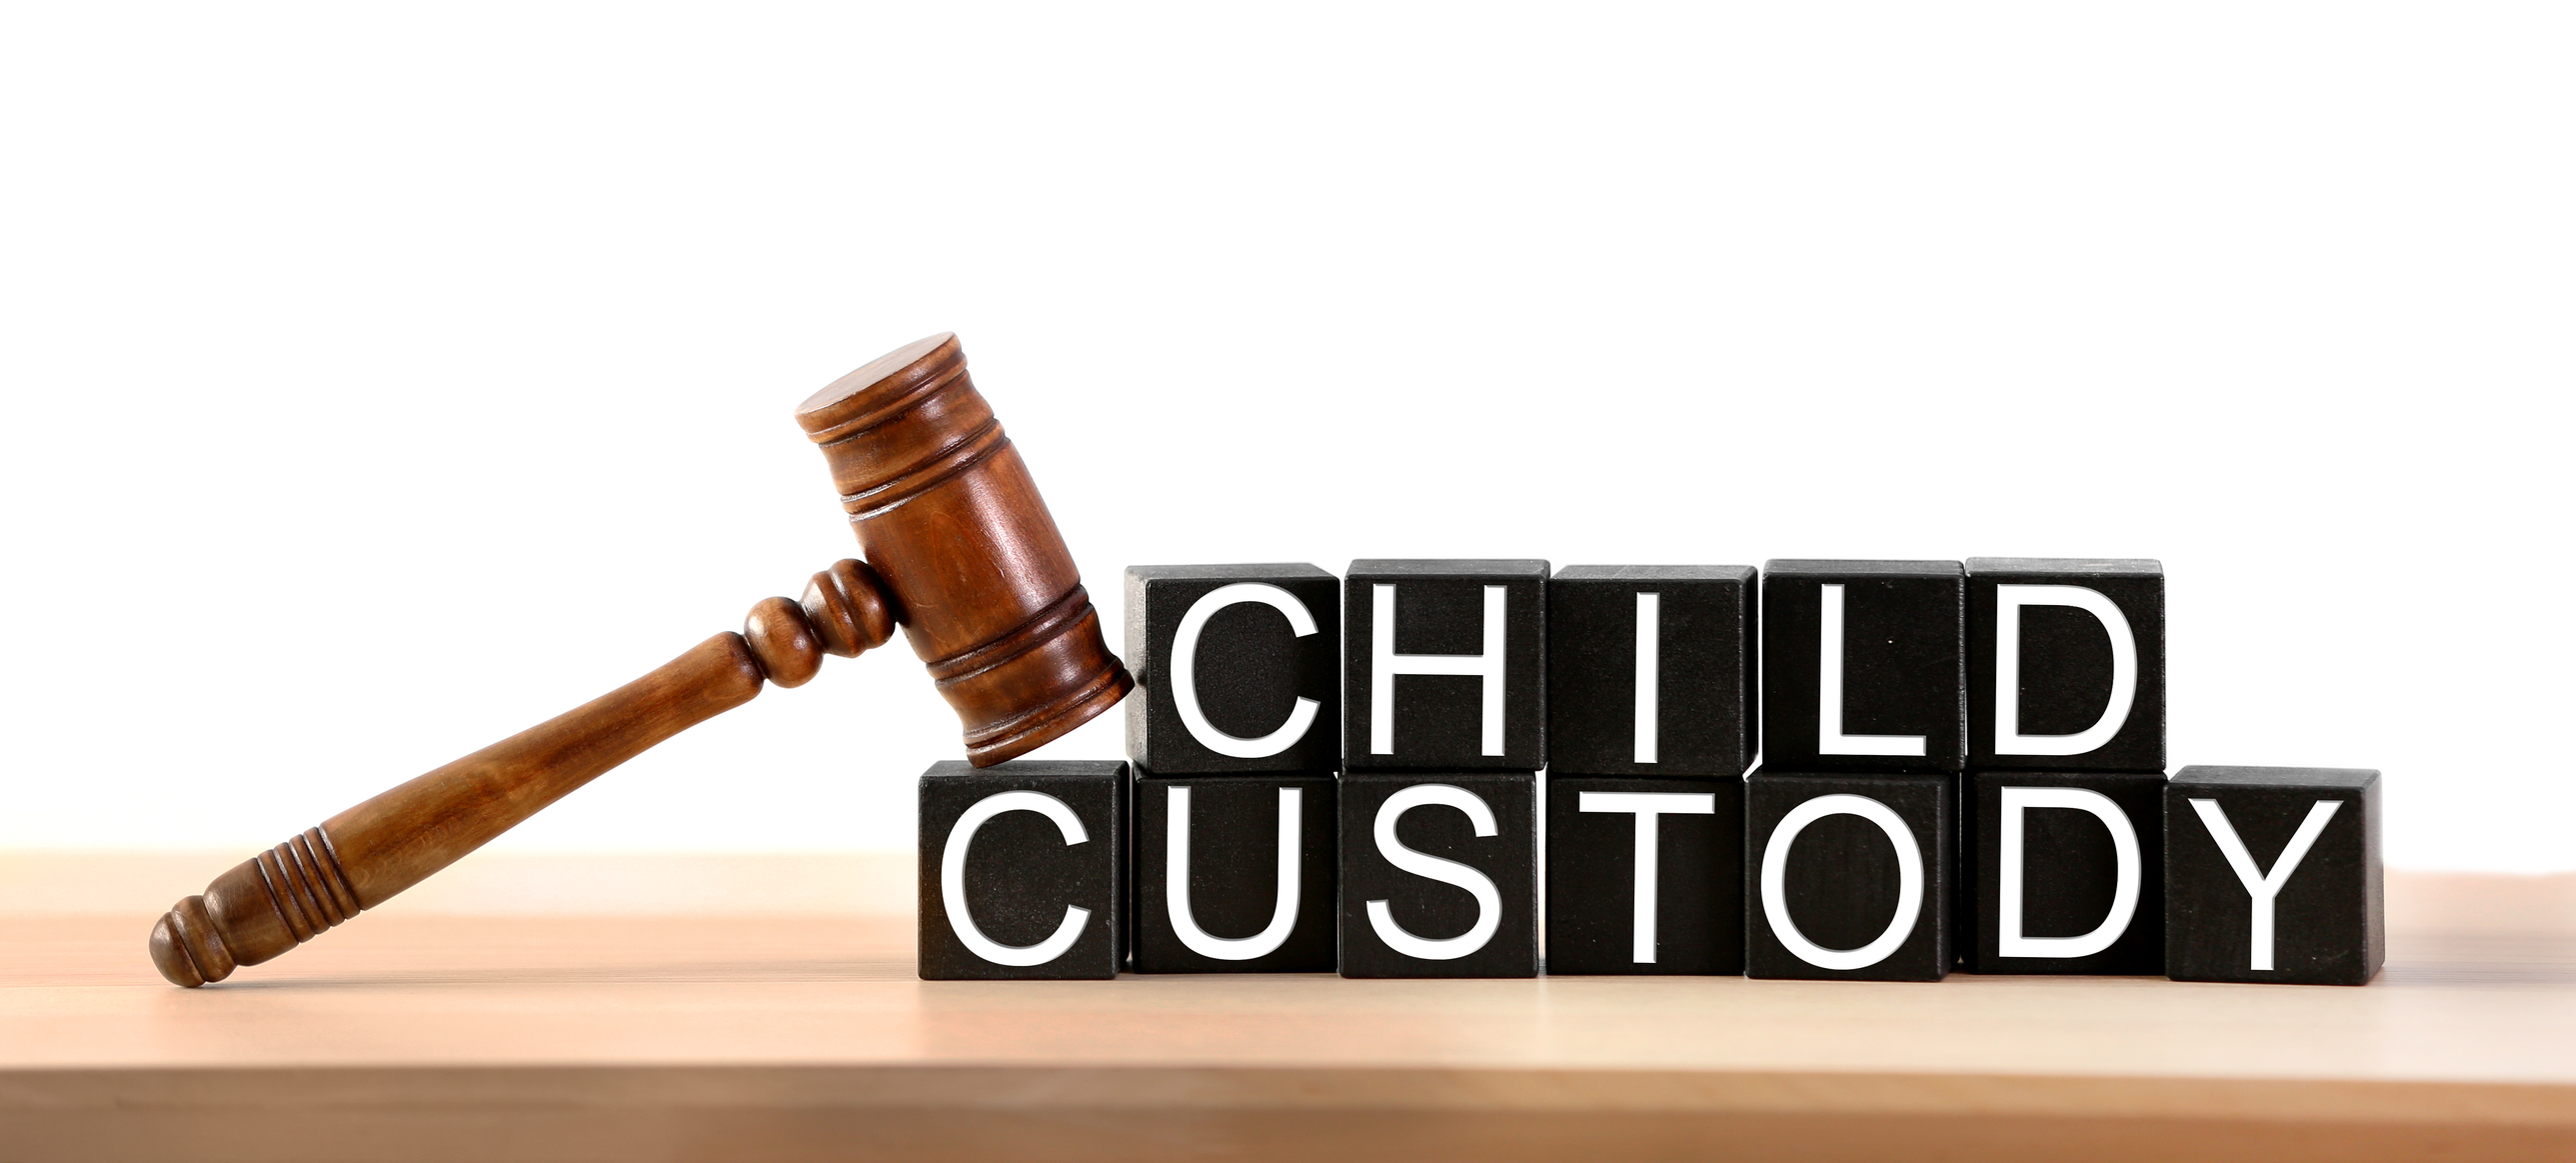 Understanding Child Custody During a Divorce